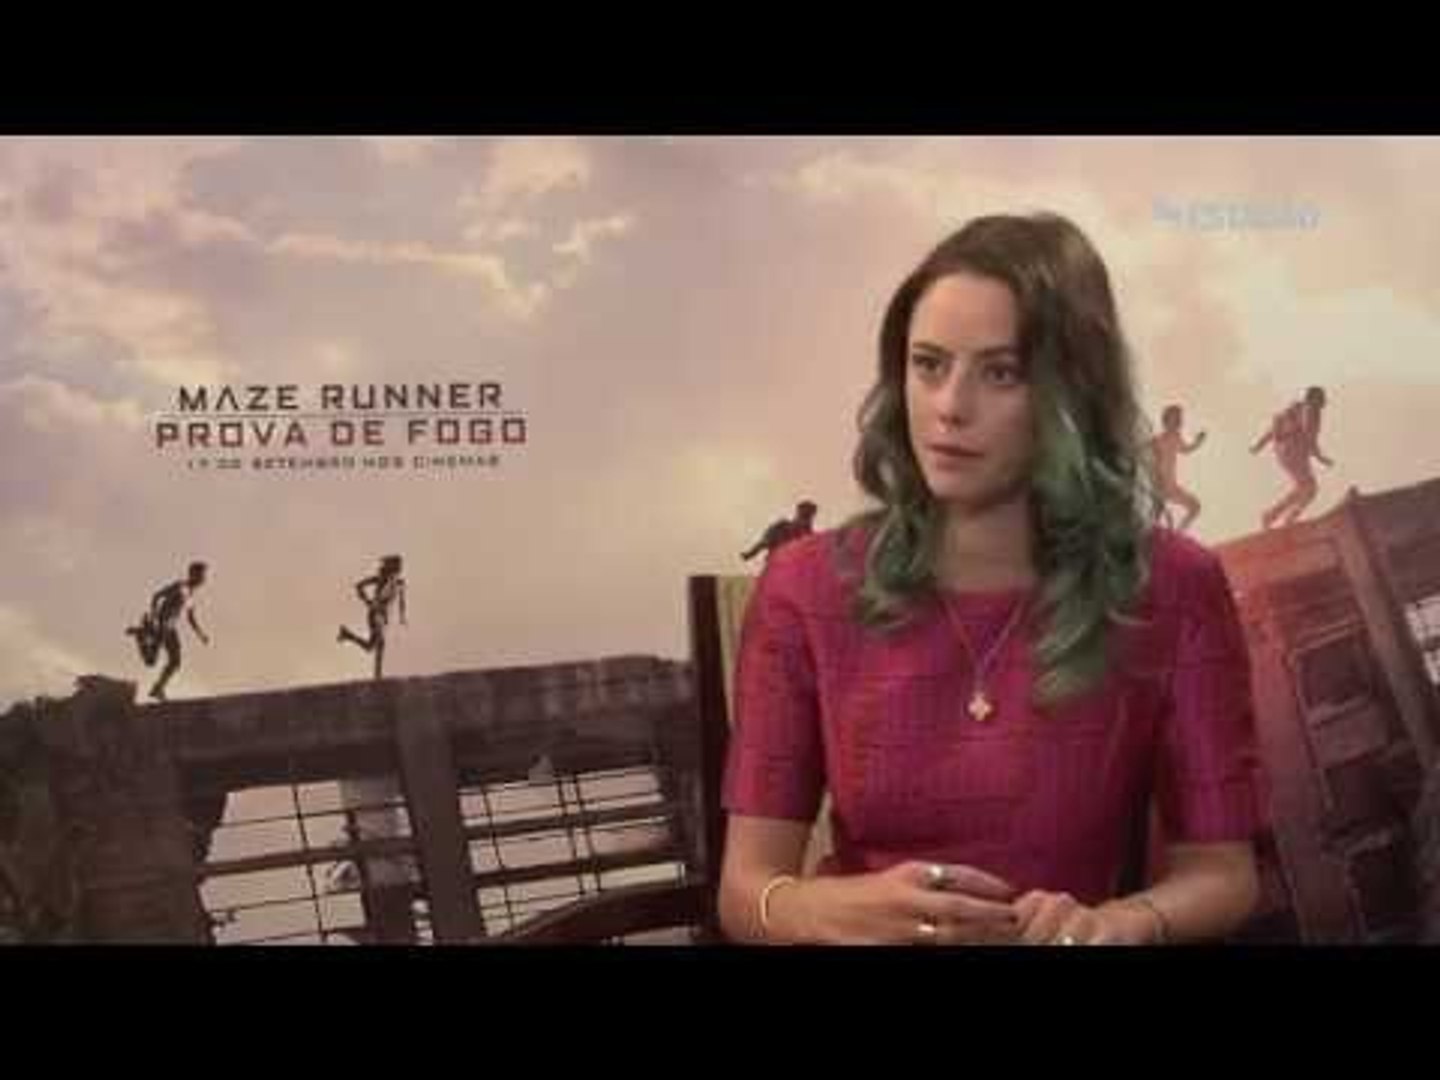 Maze Runner: Prova de Fogo - Filme 2015 - AdoroCinema